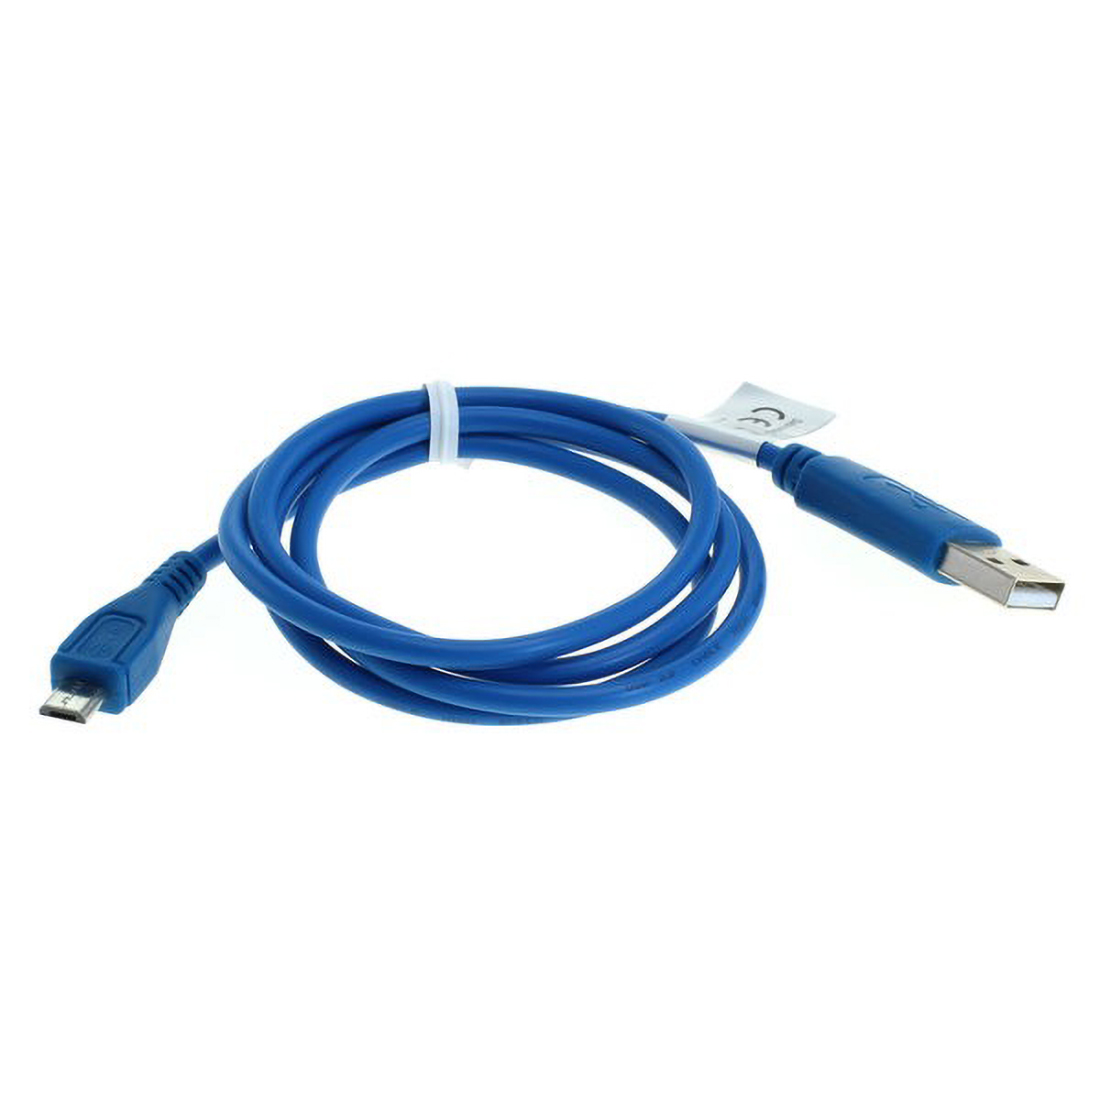 Sony Kabel MOBILOTEC Sony, DSC-WX220 kompatibel sonstige USB-Datenkabel mit blau